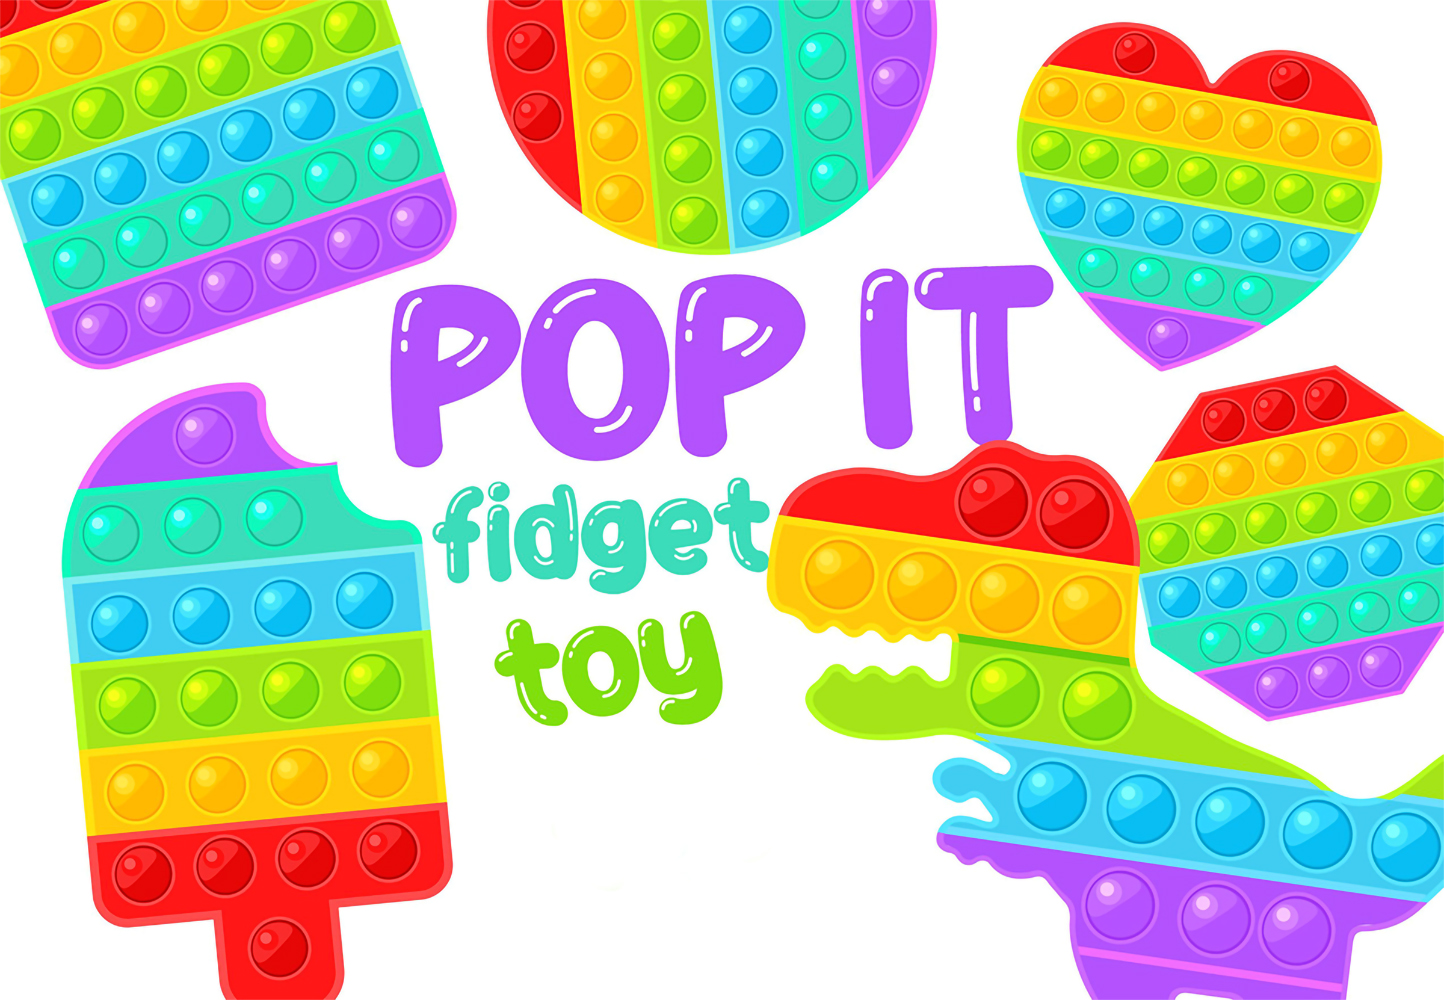 Đồ Chơi Bấm Pop Pop - Fidget spiner POP IT